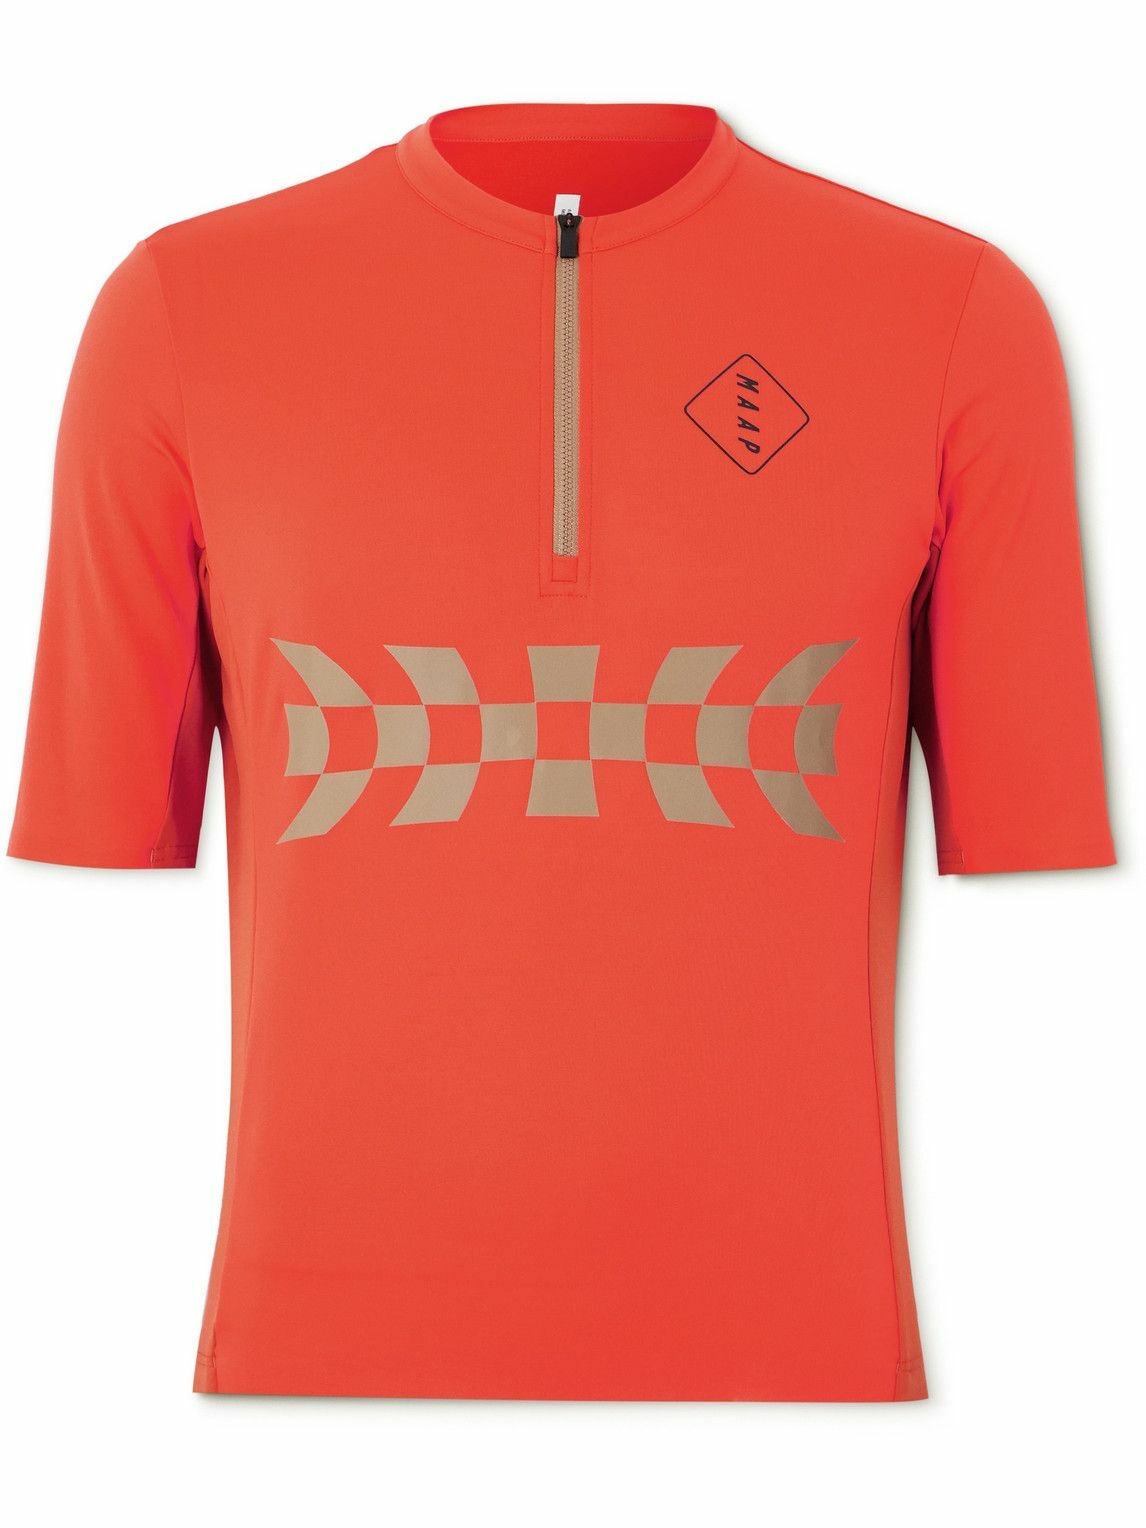 MAAP - Alt_Road Logo-Print Cycling Jersey - Red MAAP